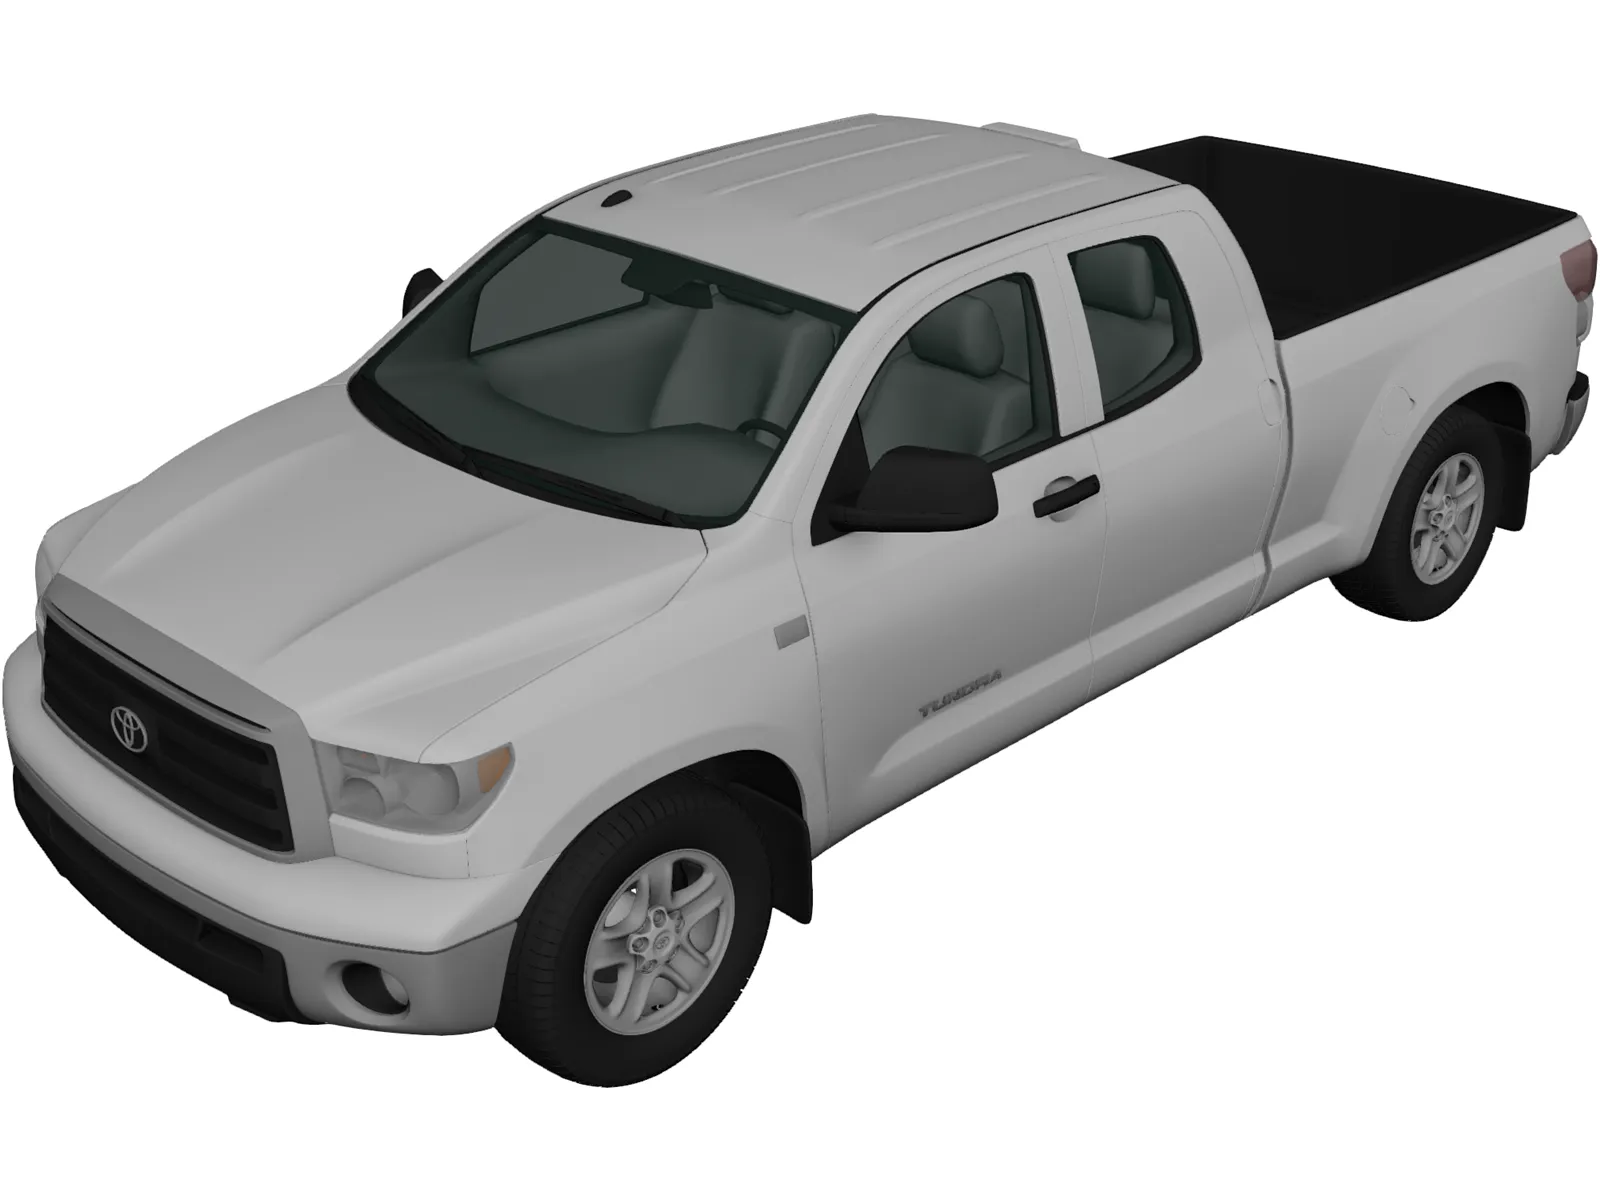 Toyota Tundra Double Cab (2011) 3D Model